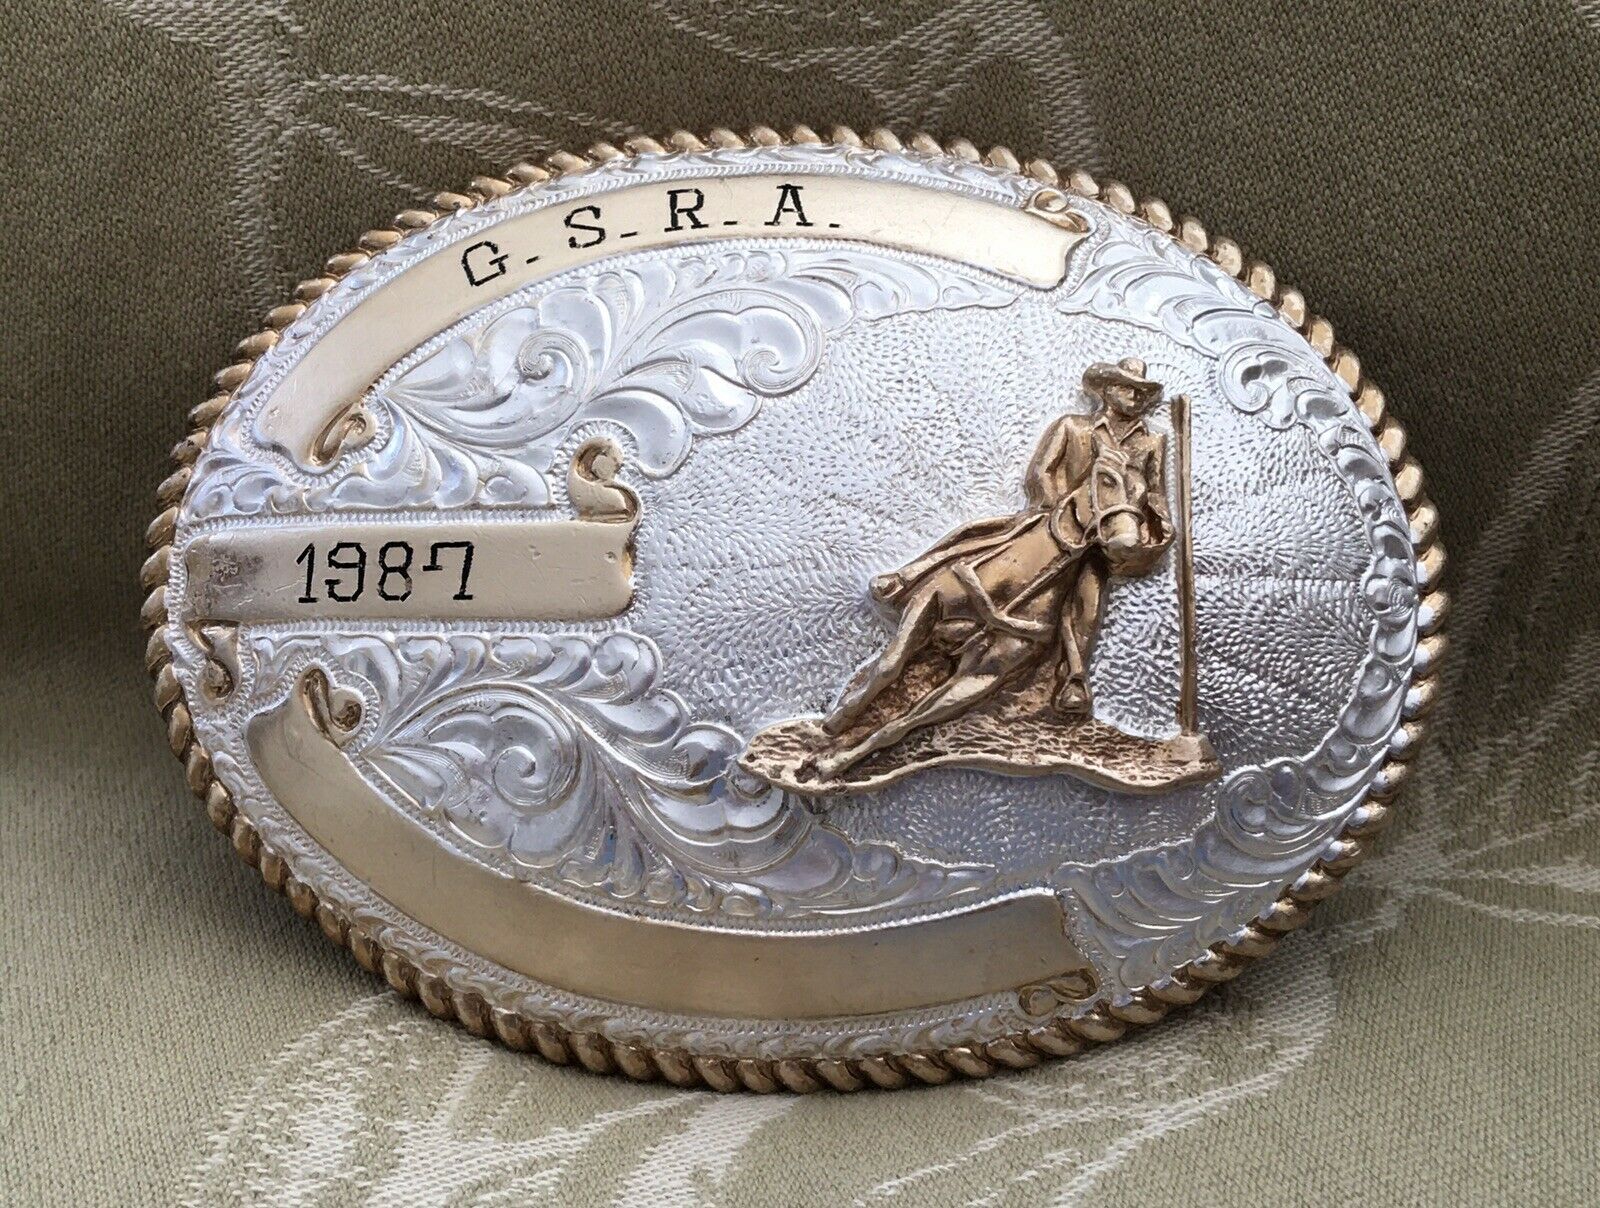 Vtg 1987 Gsra Gem State Rodeo Assoc Idaho Usa Crumrine Cowboy Trophy Belt Buckle